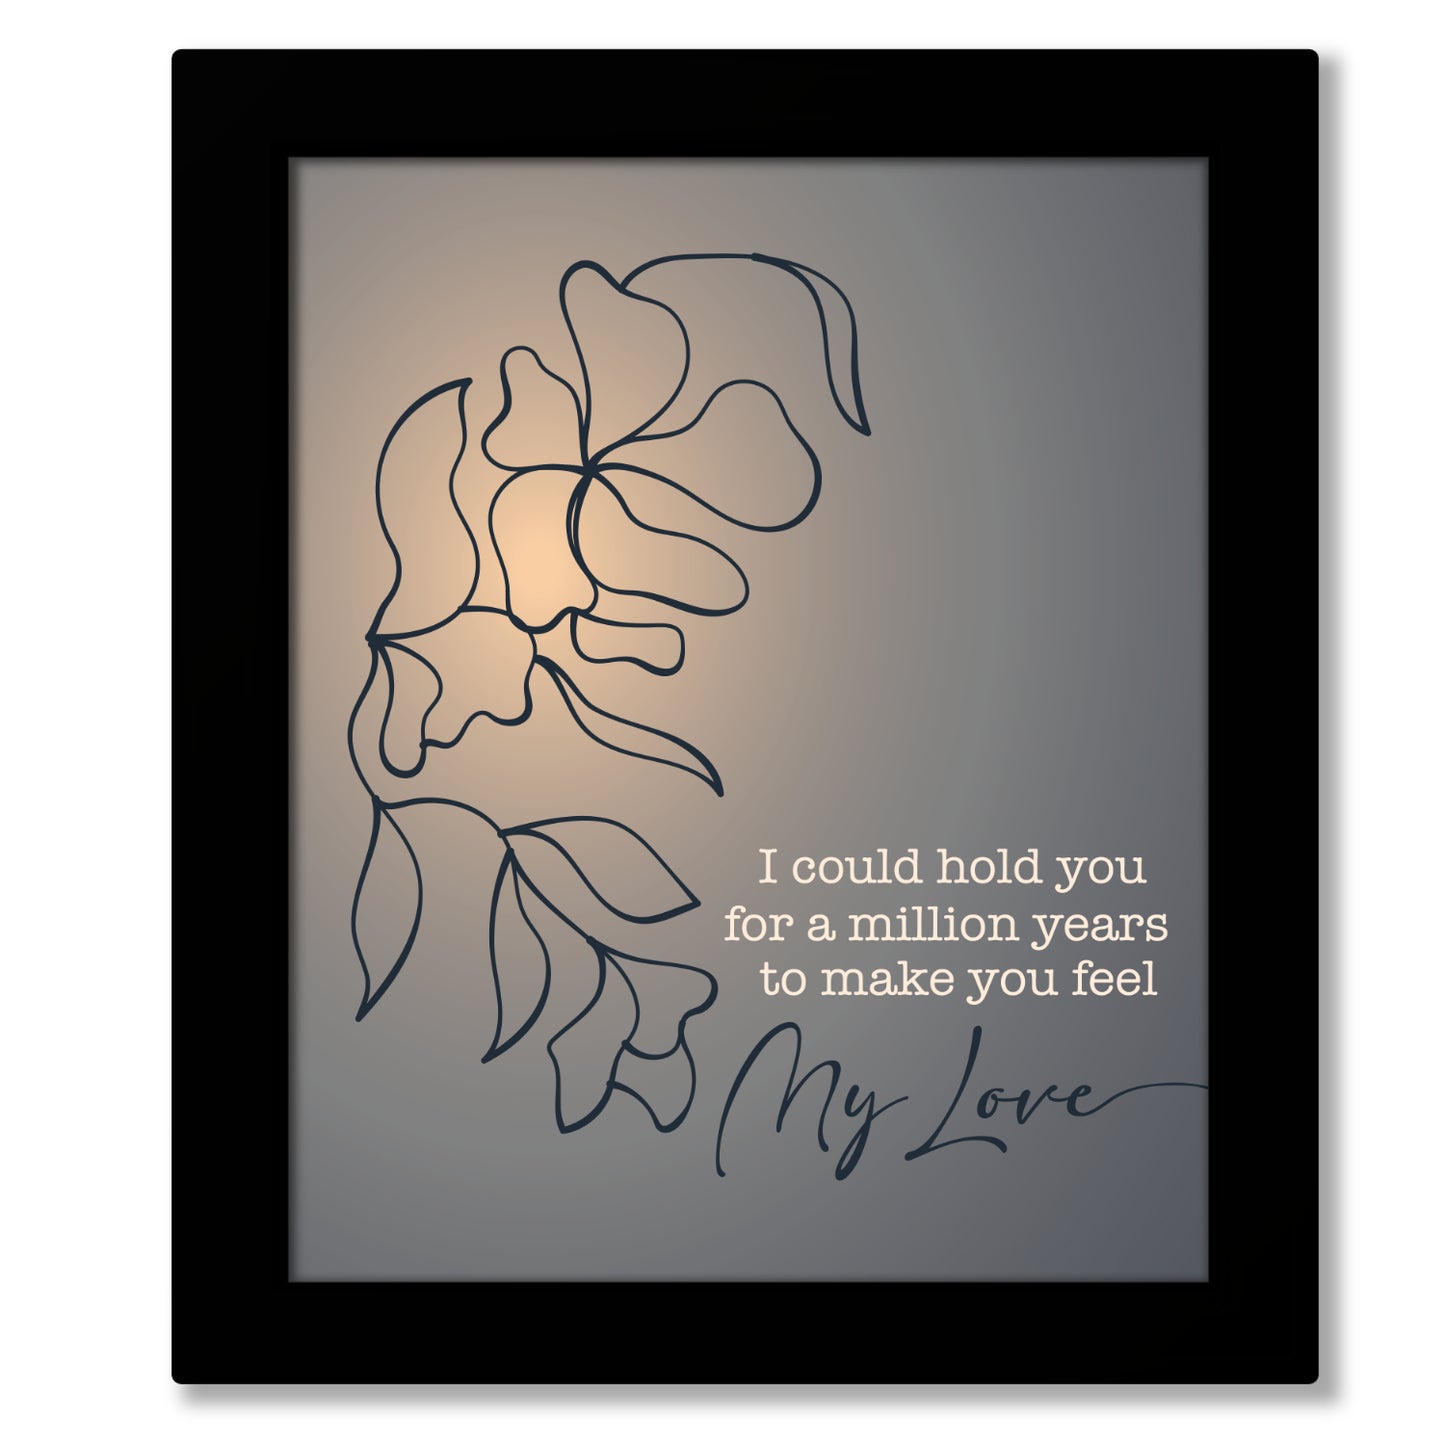 Make You Feel My Love by Bob Dylan - Lyric Inspired Wall Art Print